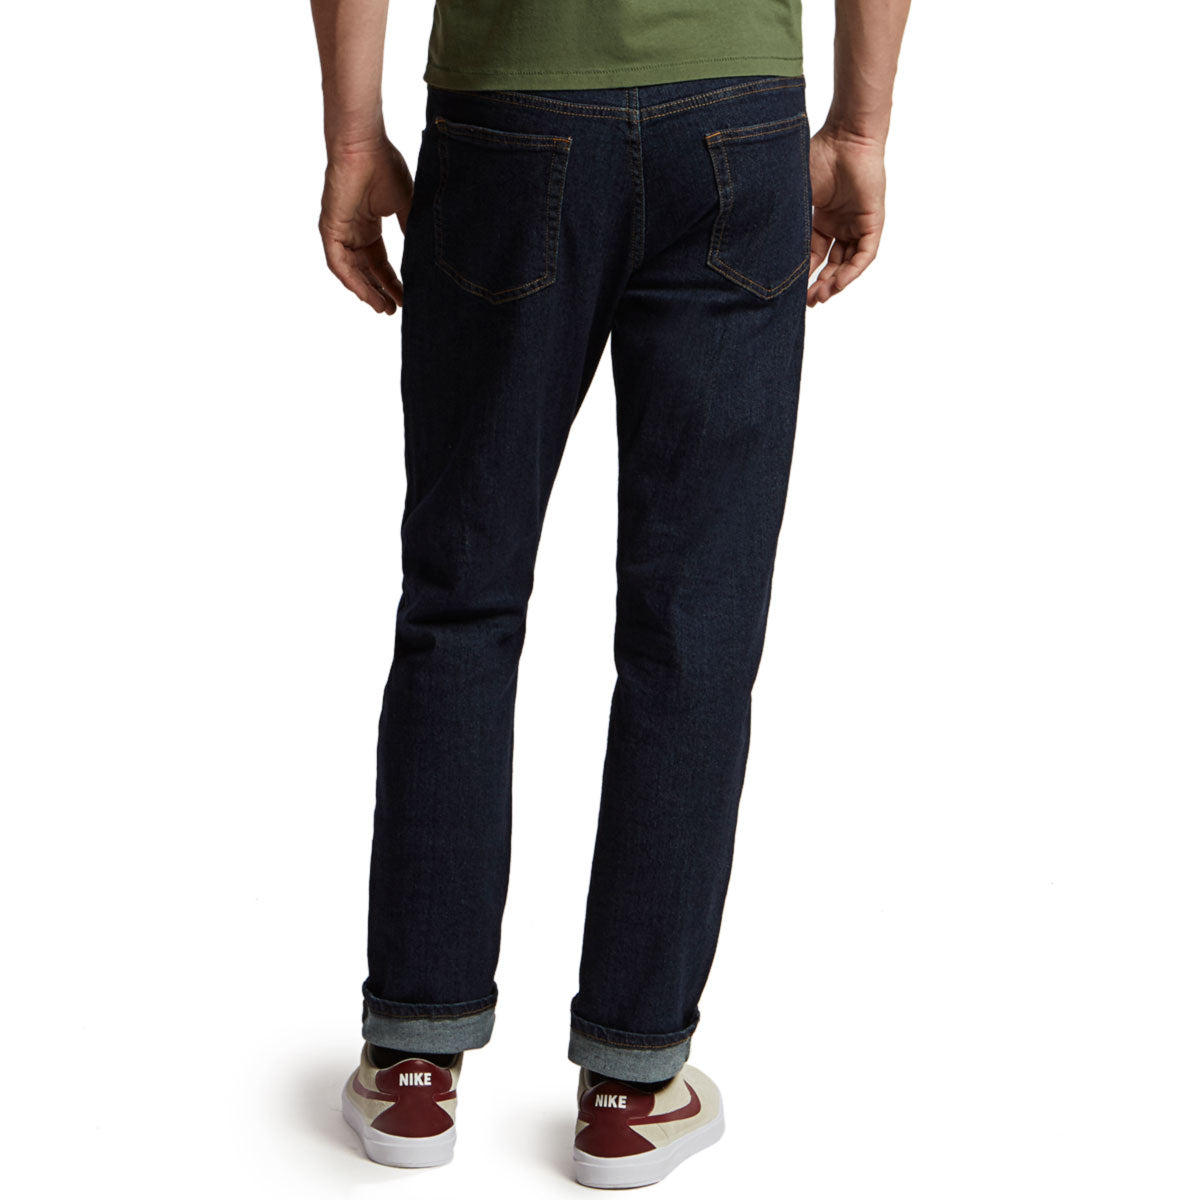 CCS Slim Fit Jeans - Light Indigo image 3